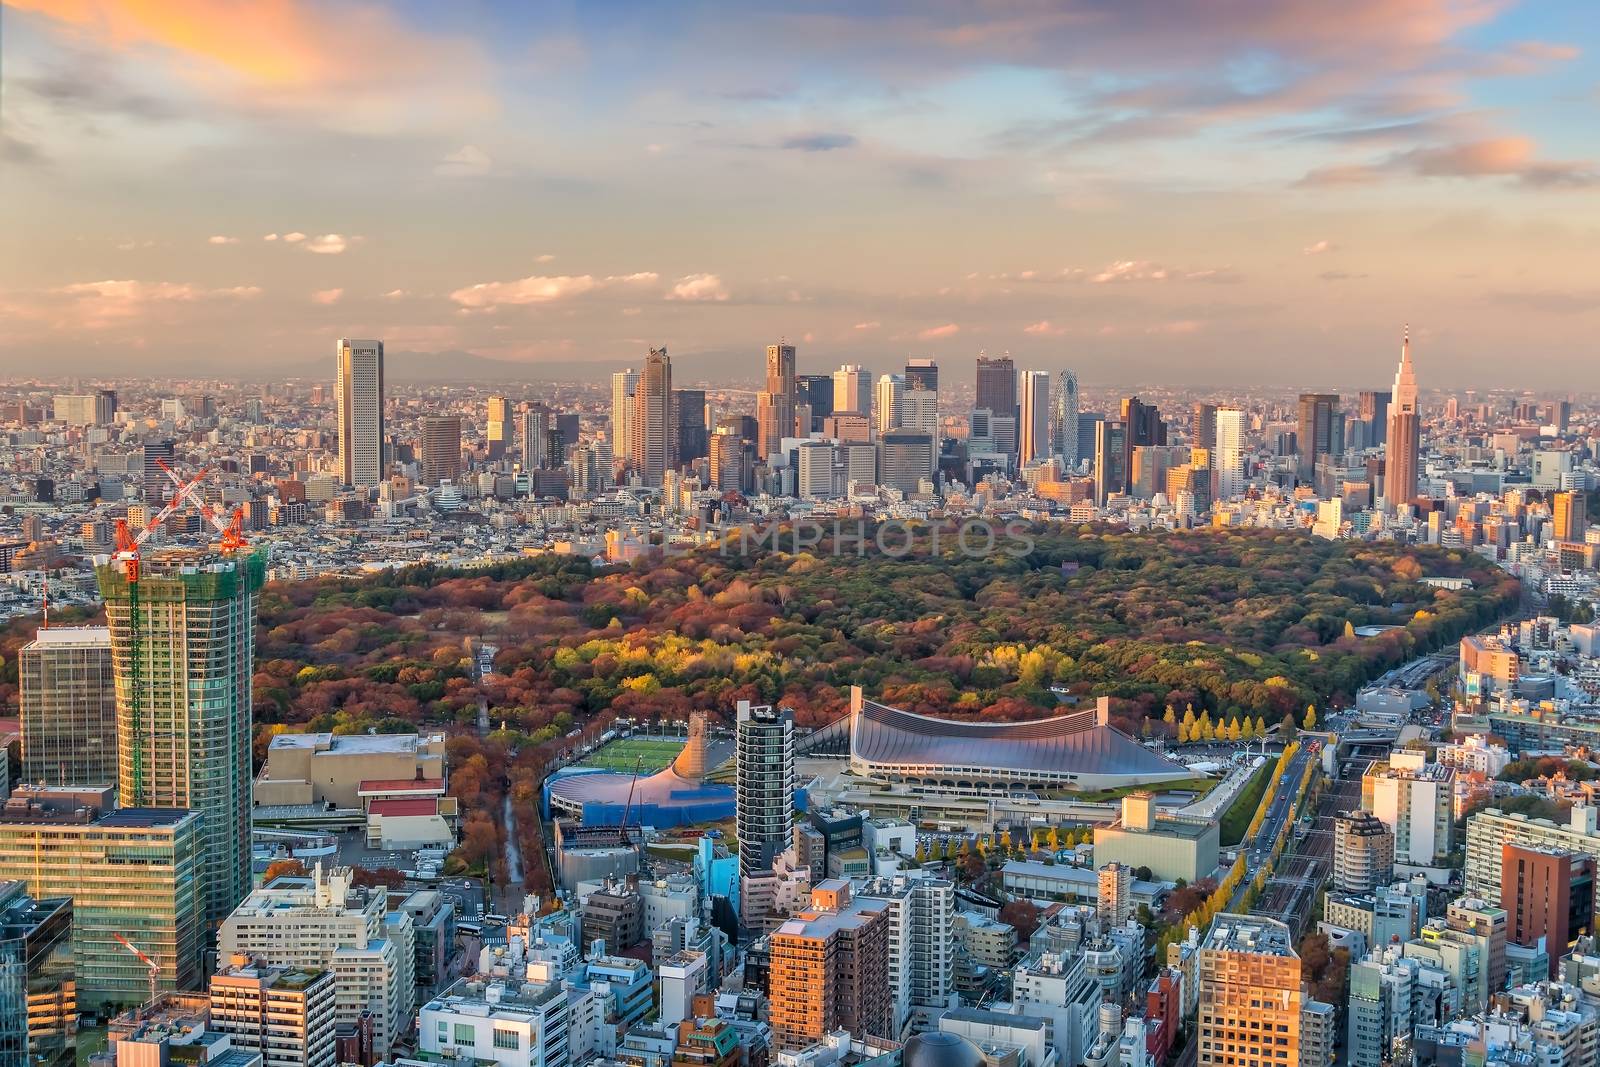 Top view of Tokyo city skyline (Shinjuku area) at sunset in Japan.

